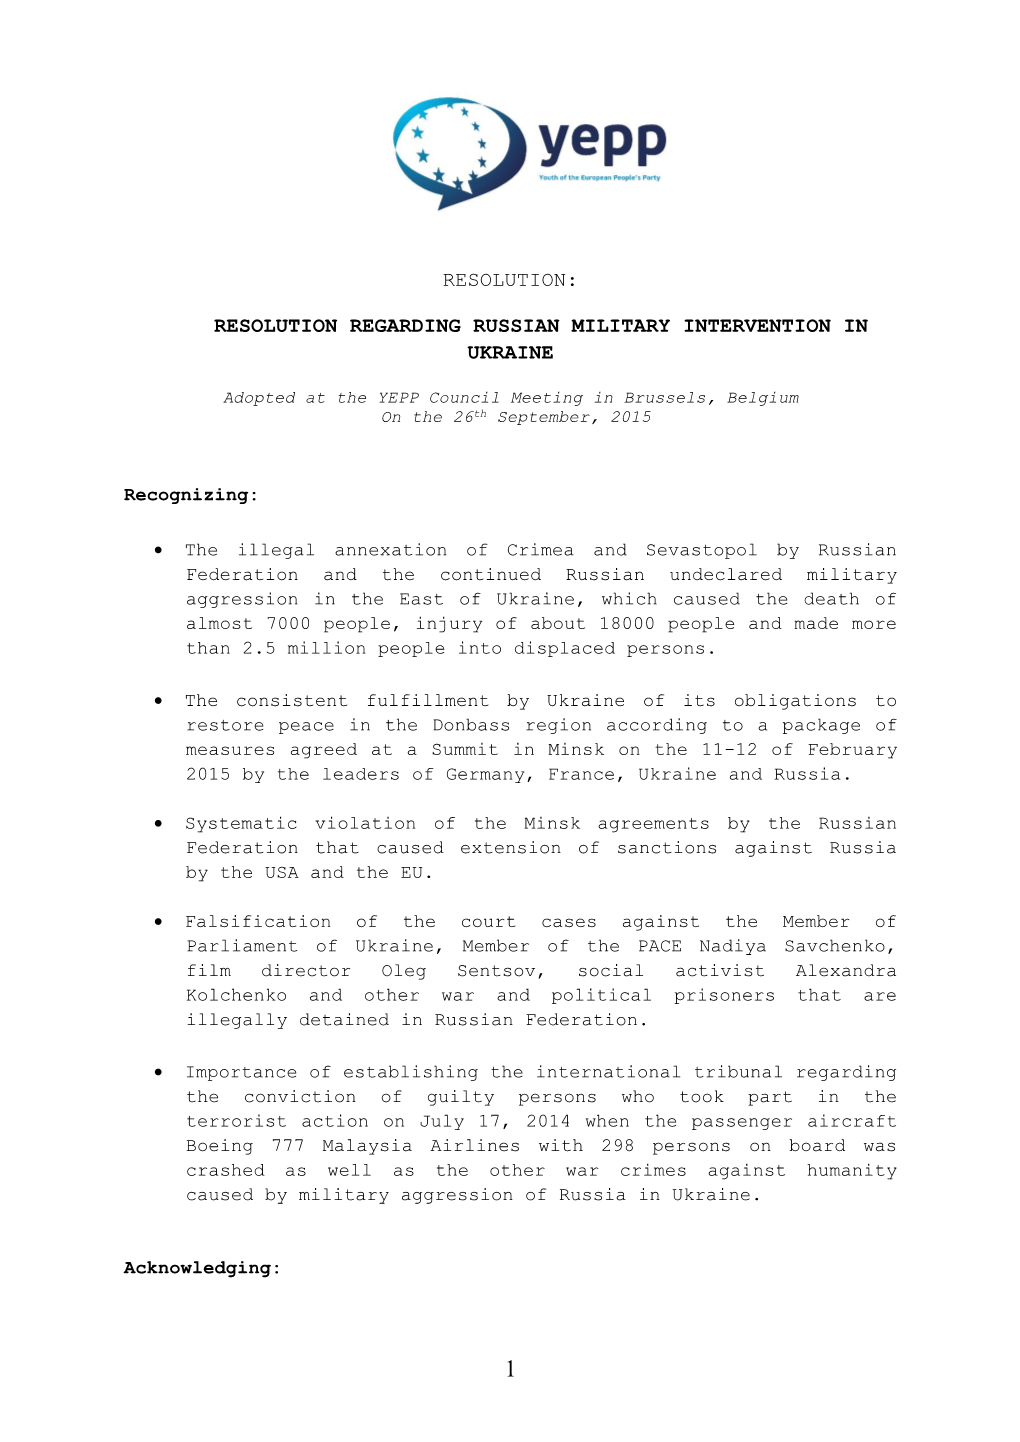 Resolution Regarding Russian Military Intervention in Ukraine